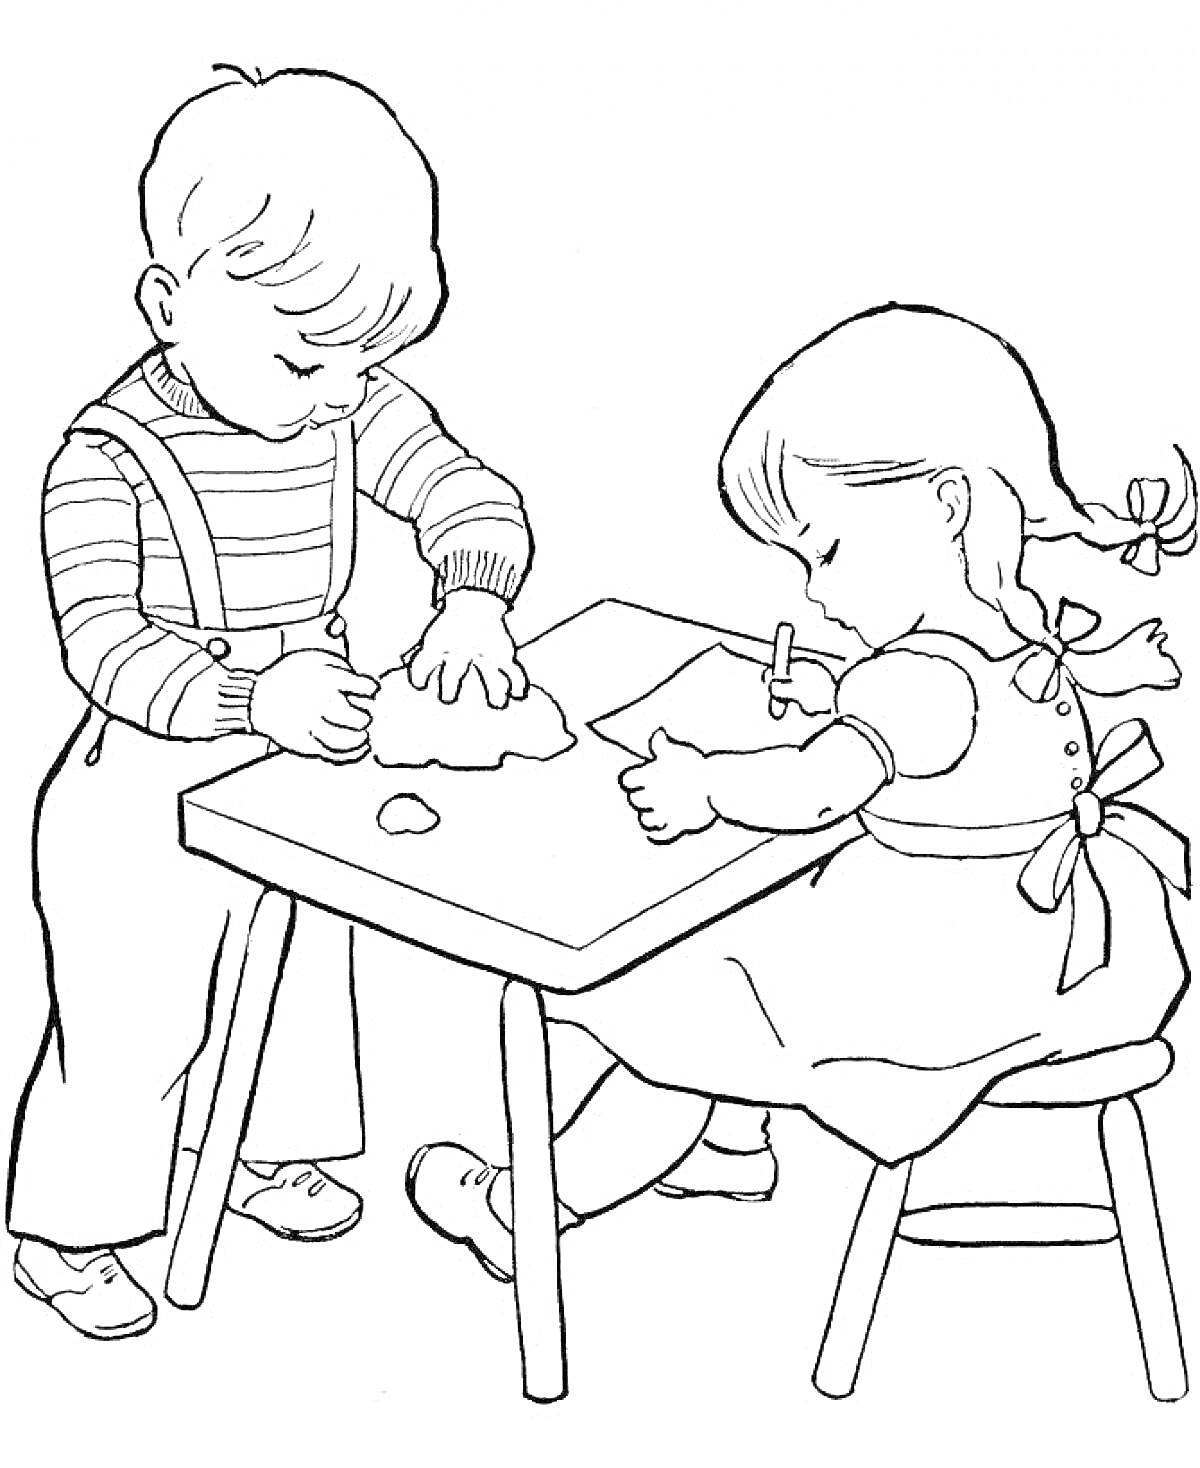 Раскраска Дети за столом лепят из пластилина и рисуют